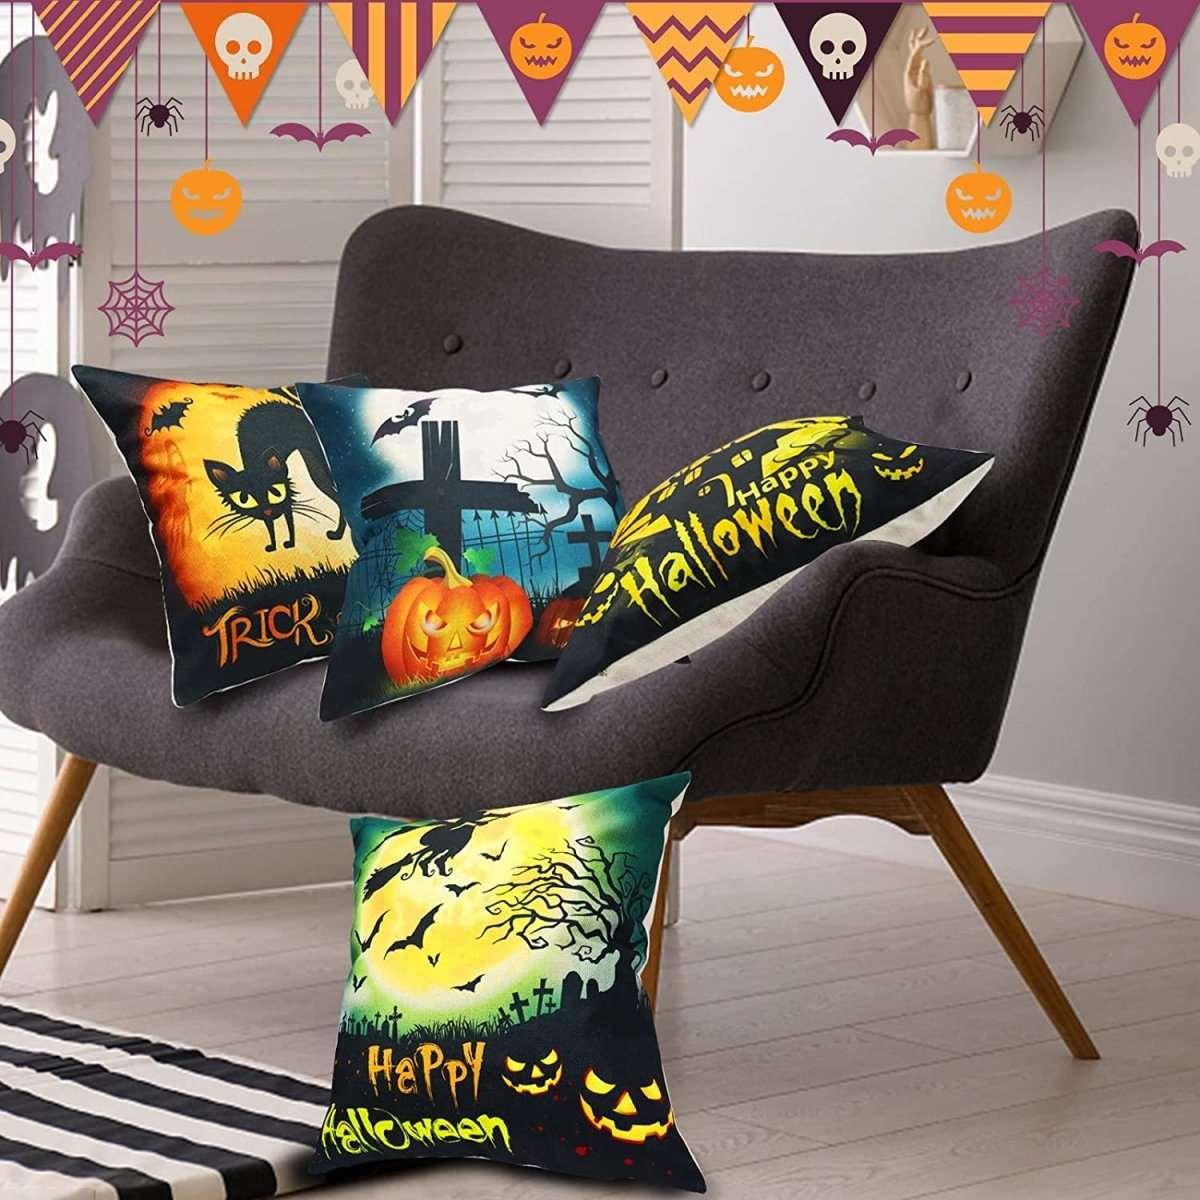 Halloween Decorations Pillow Covers 18x18 Set of 4 for Halloween Decoration Indoor - Cykapu